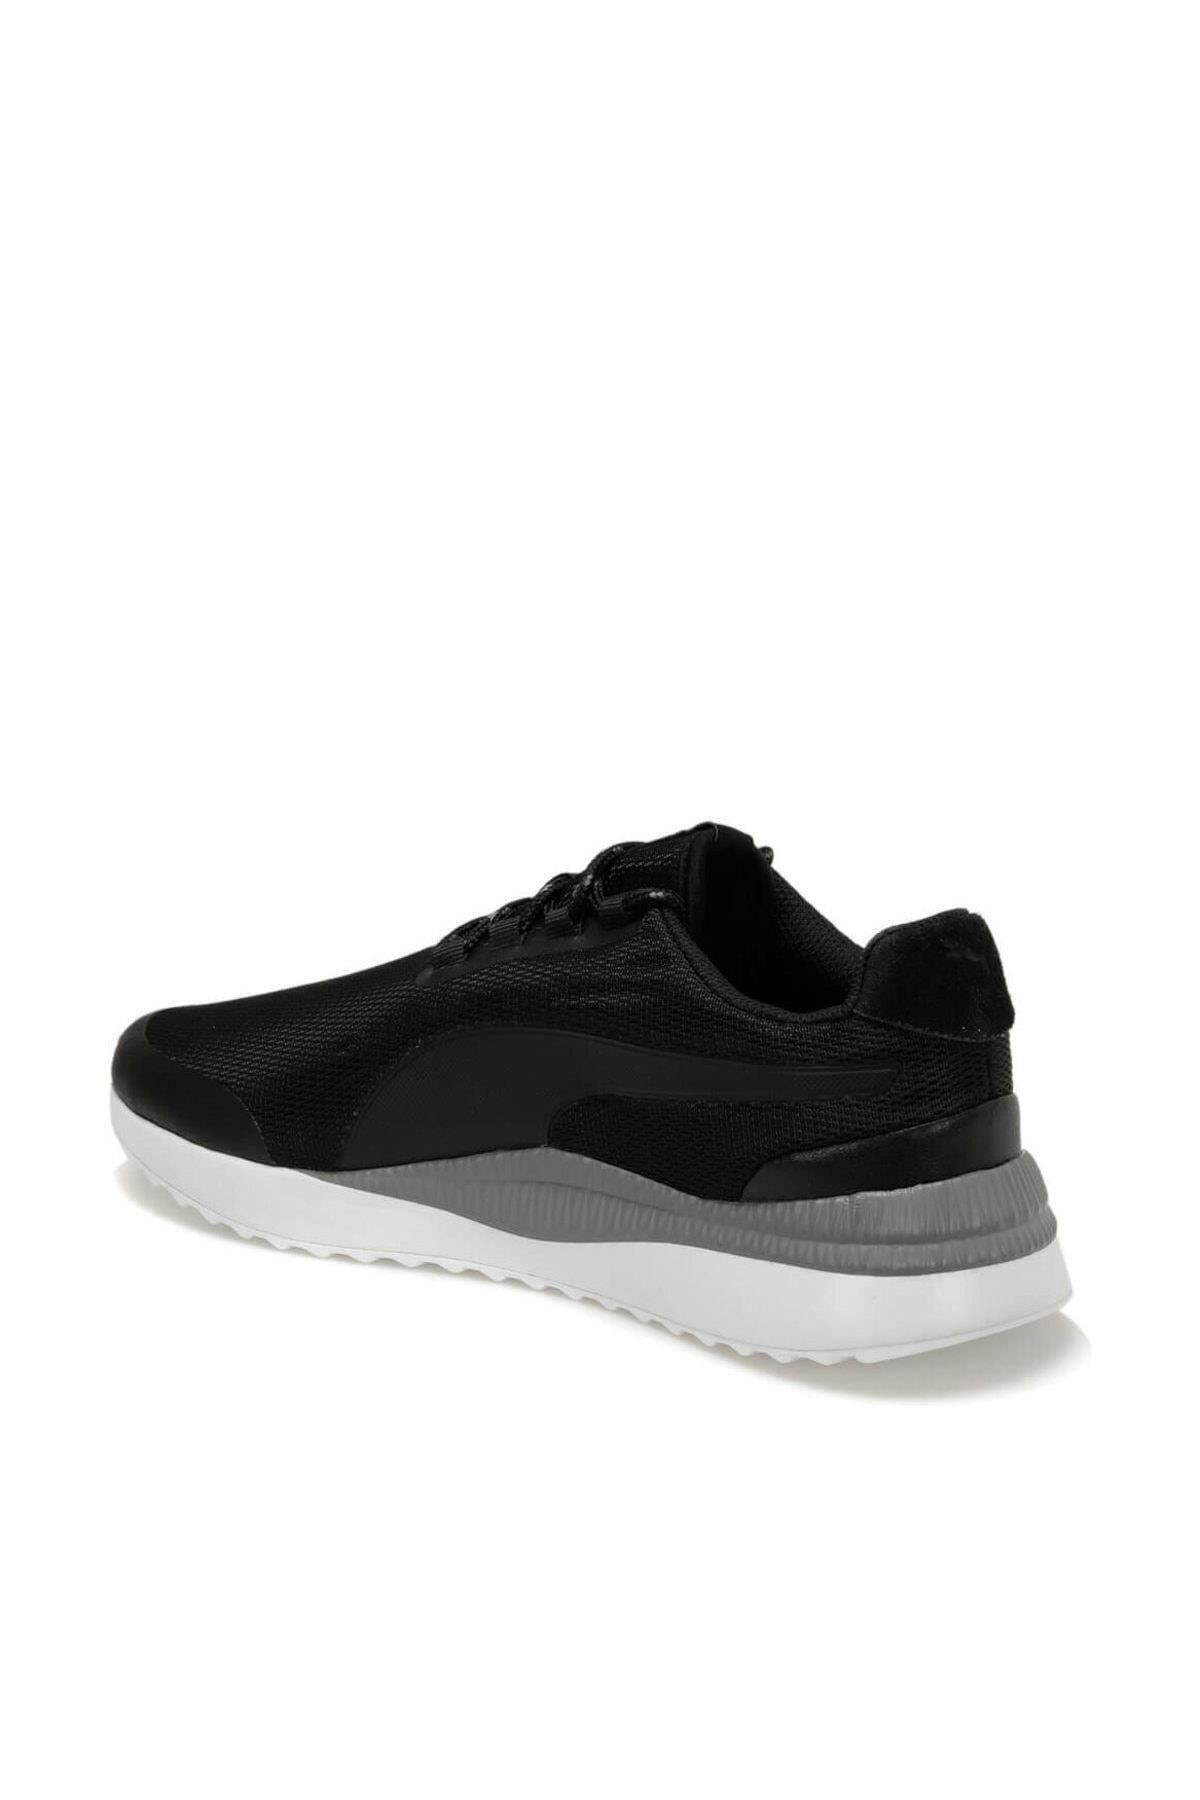 Puma PACER NEXT FS Siyah Unisex Sneaker Ayakkabı 100480504